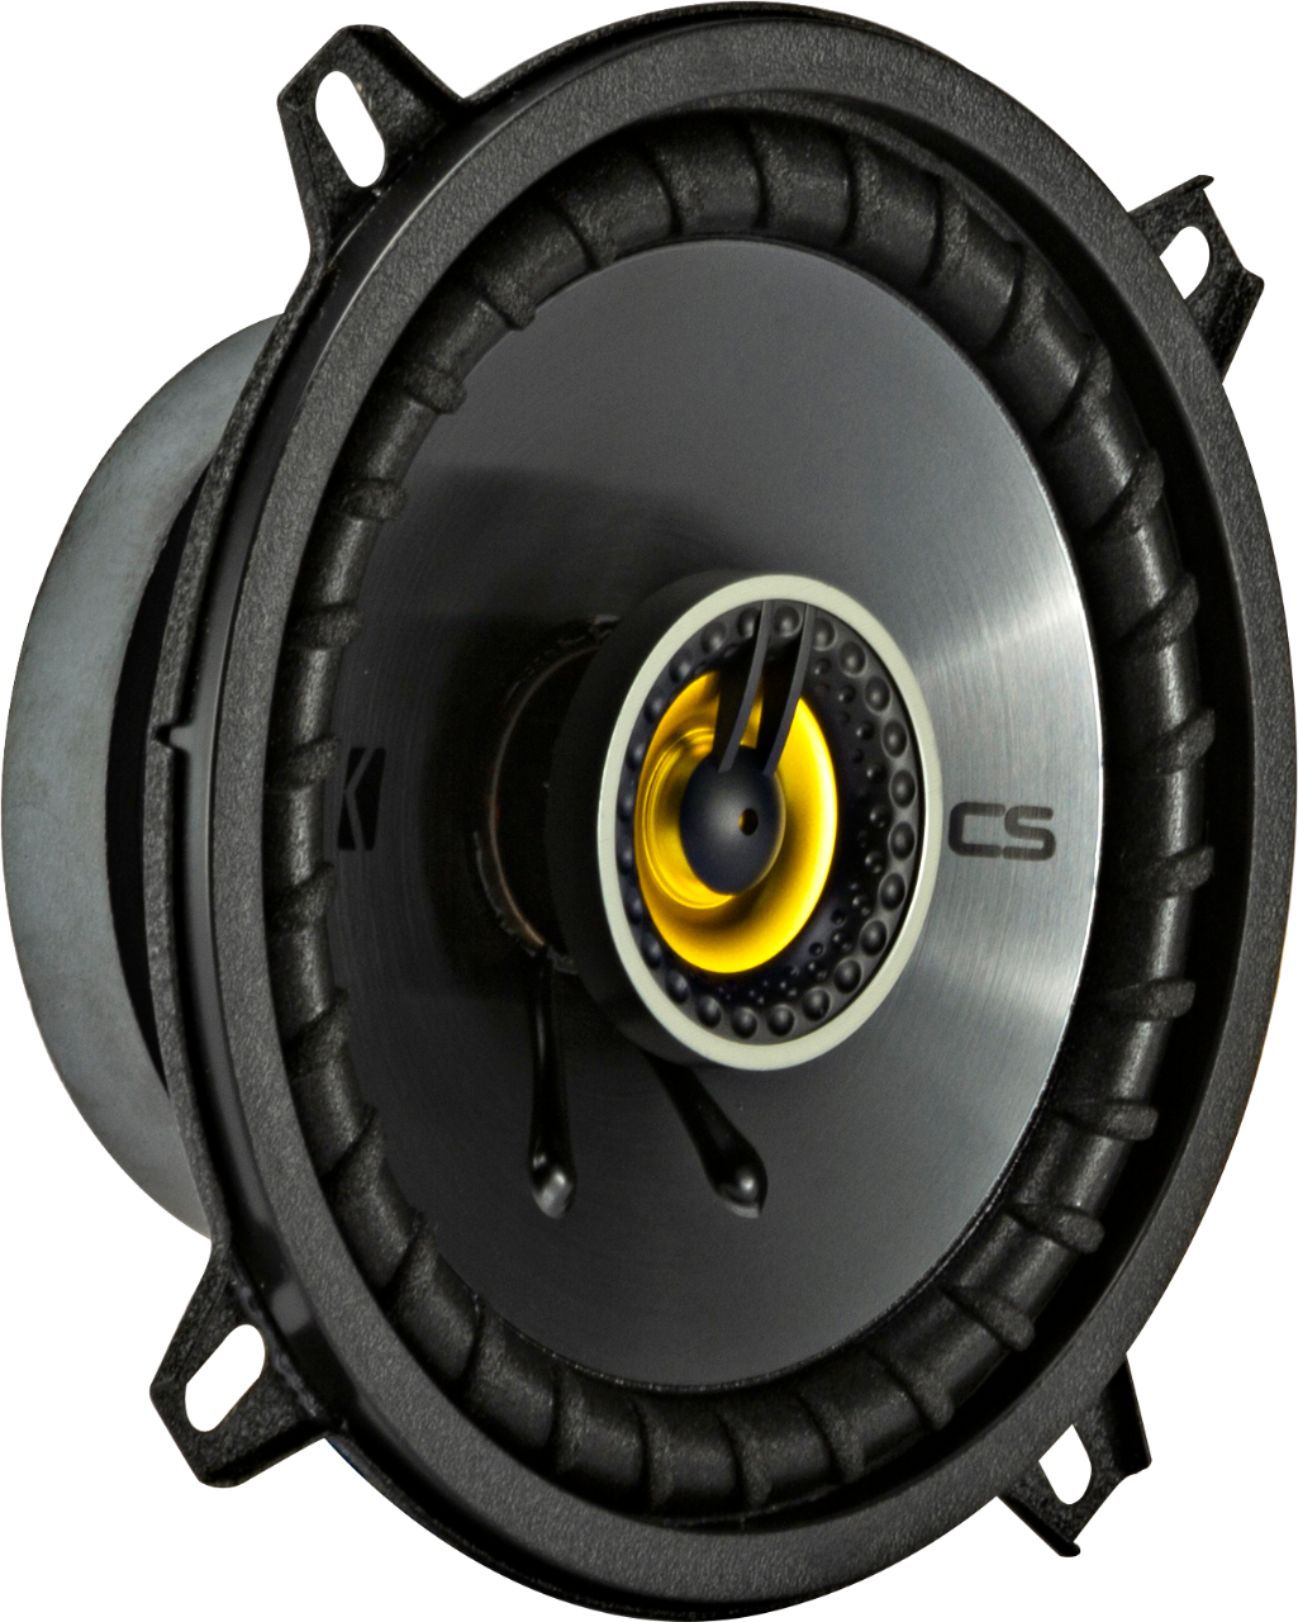 Angle View: KICKER - CS Series 5-1/4" 2-Way Car Speakers with Polypropylene Cones (Pair) - Yellow/Black